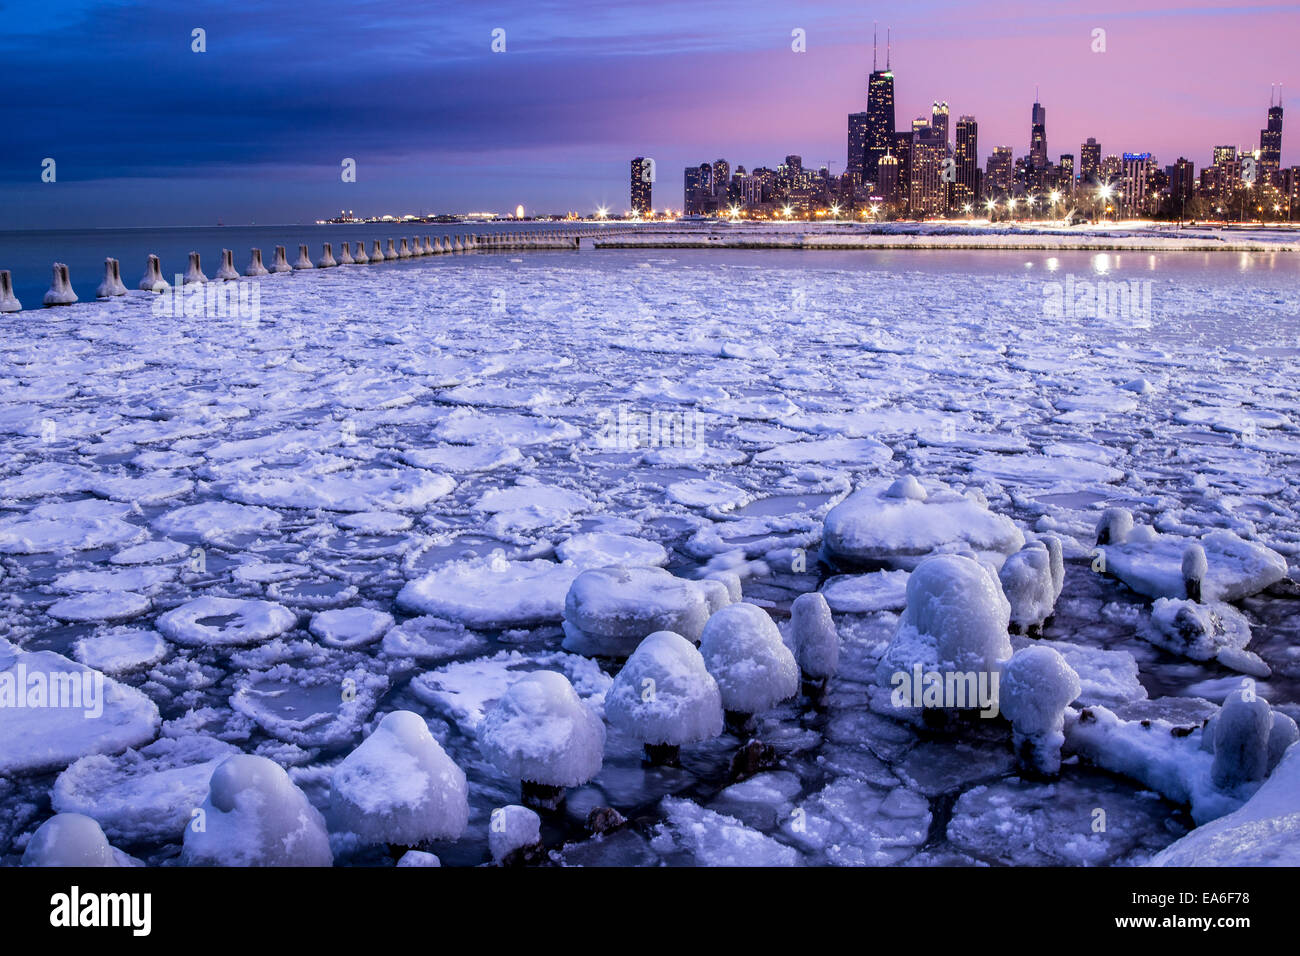 City skyline seen across icy harbor, Chicago, Illinois, United States Stock Photo